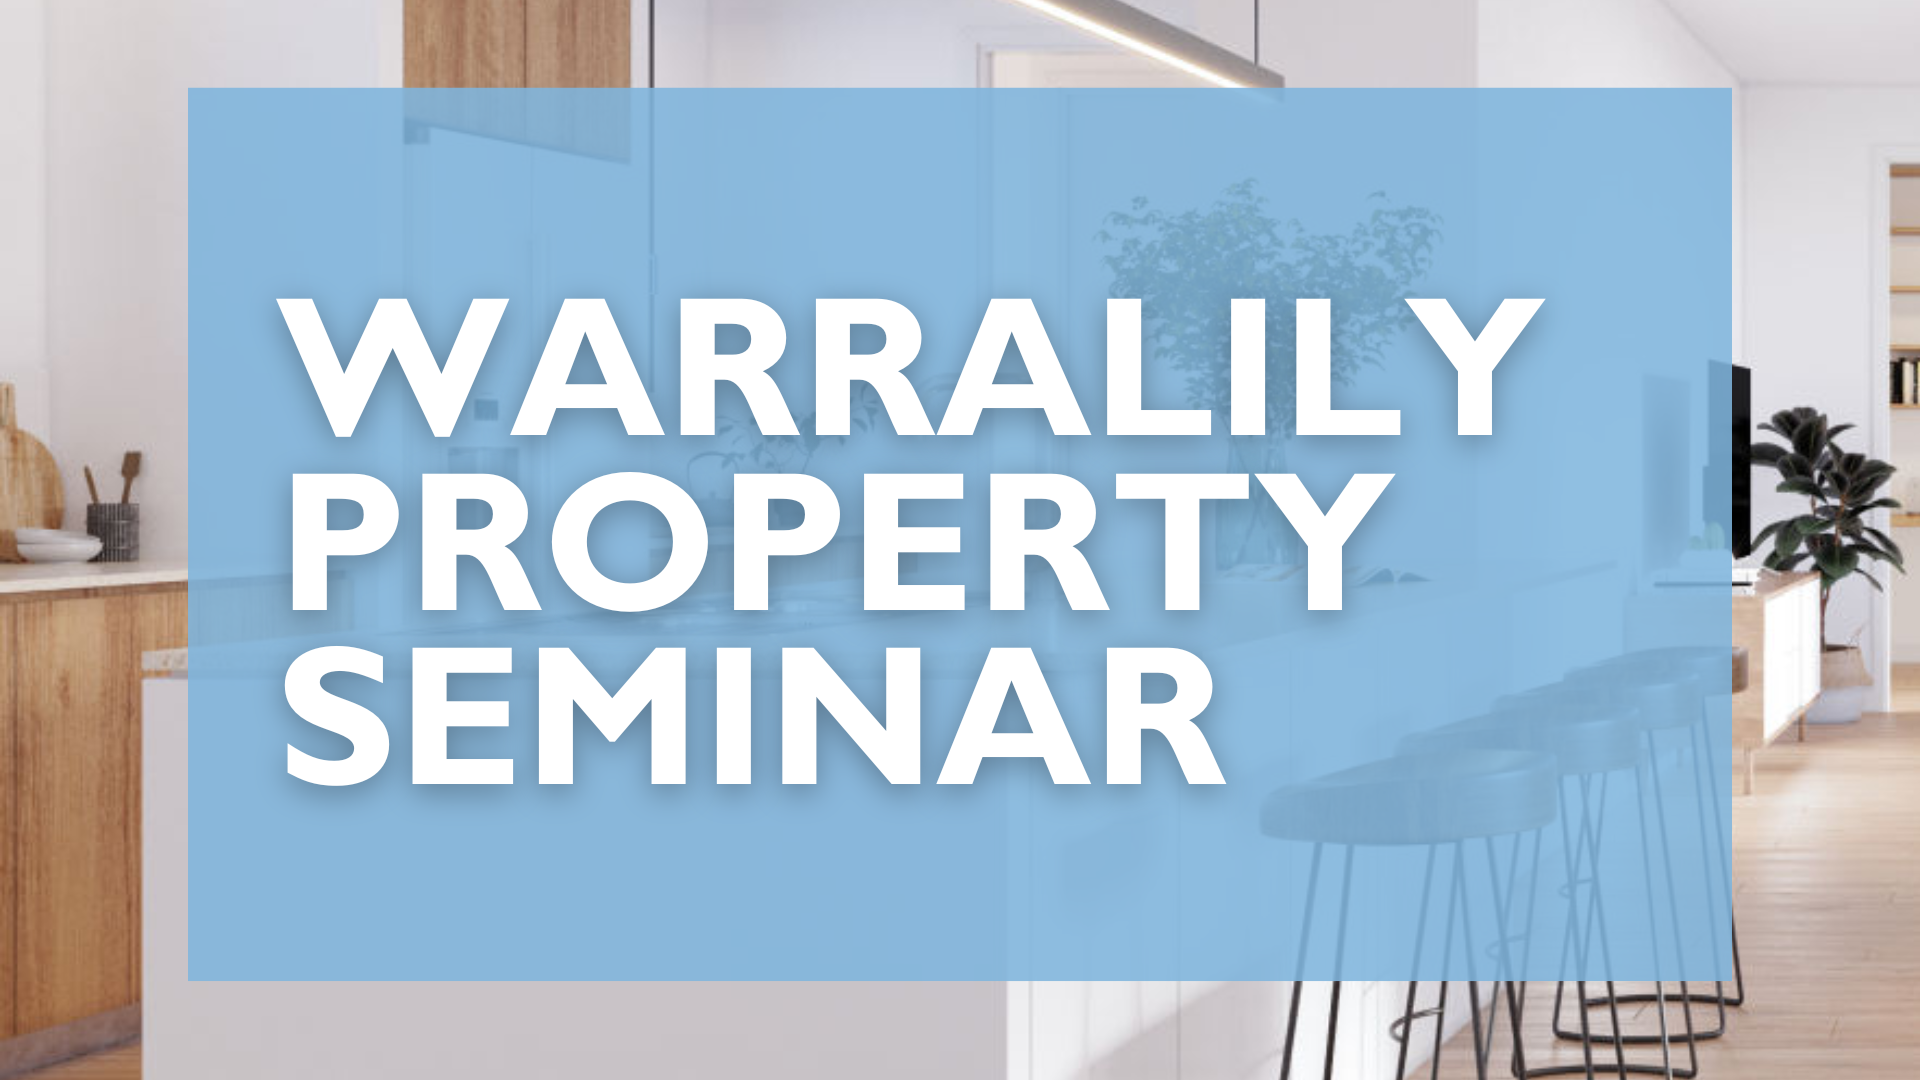 Warralily Property Seminar